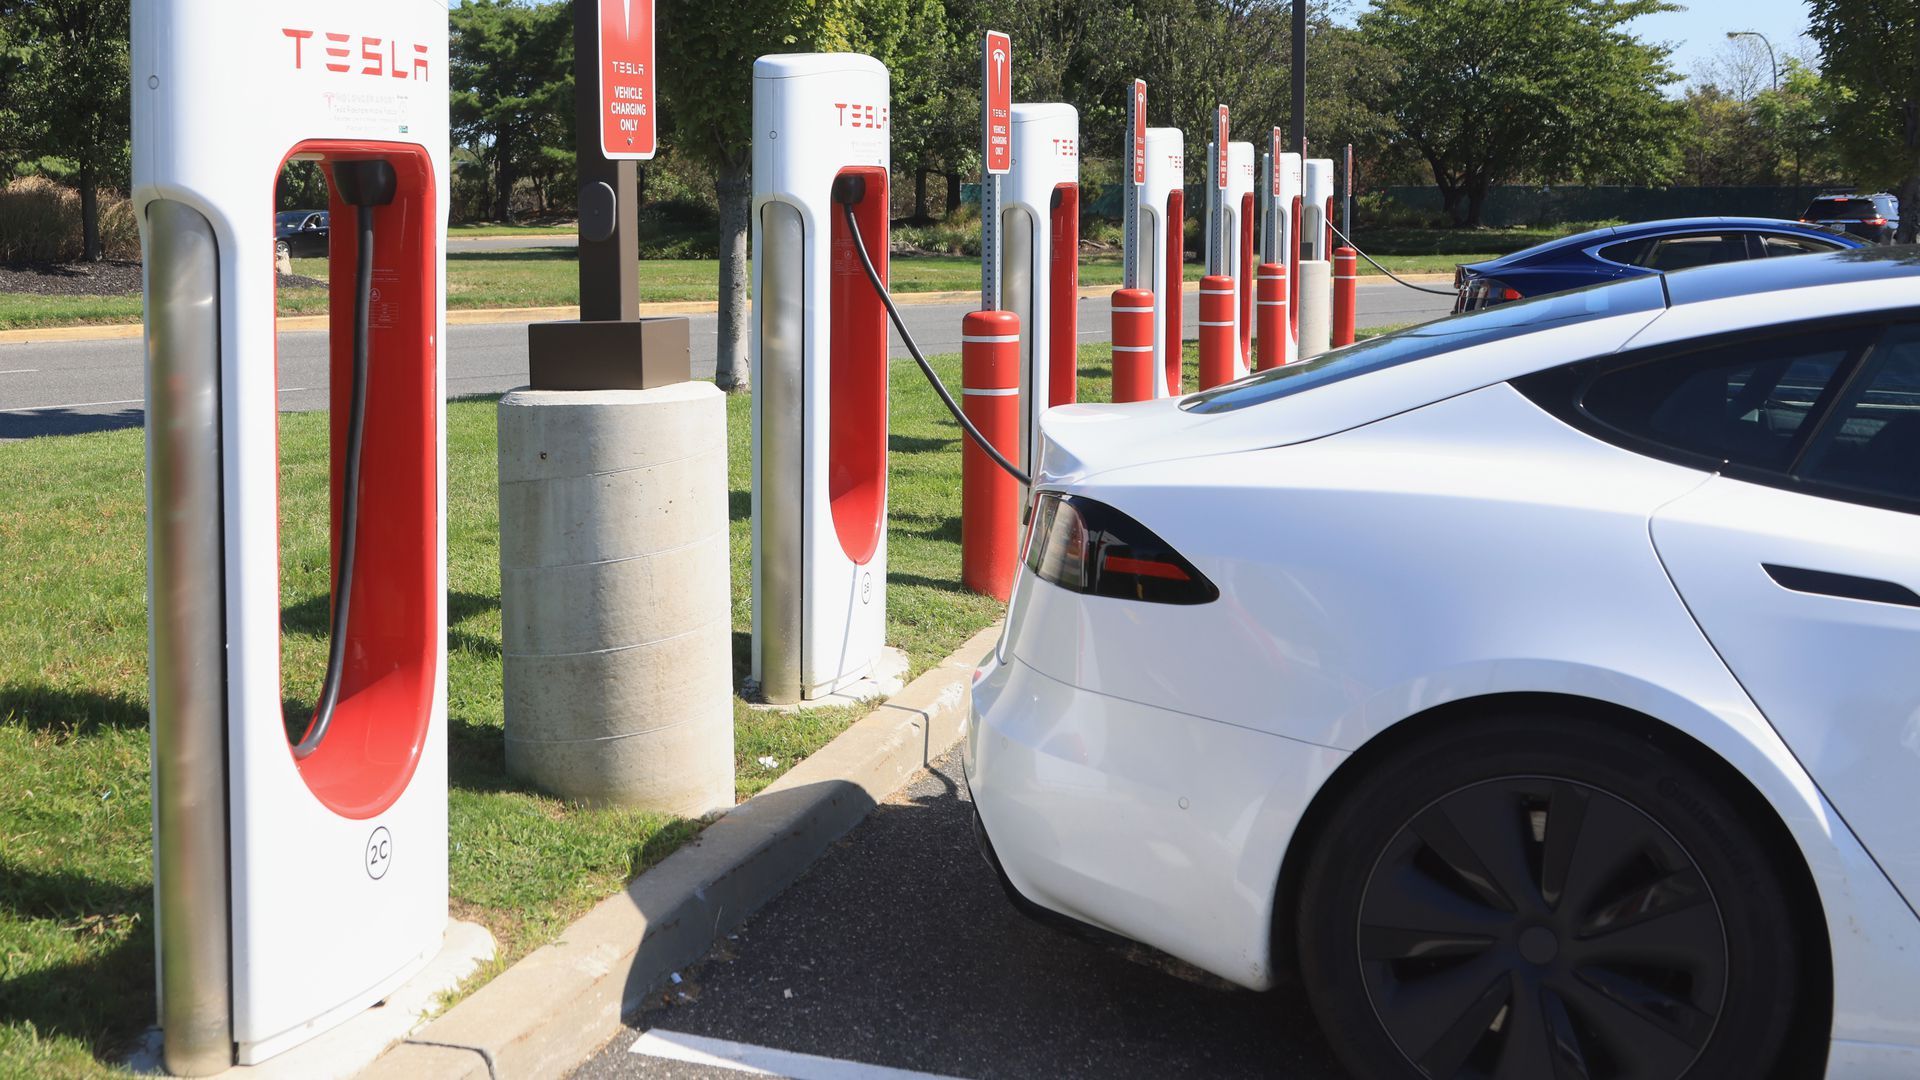 Tesla car charging station on Sept. 15 in Garden City, New York.